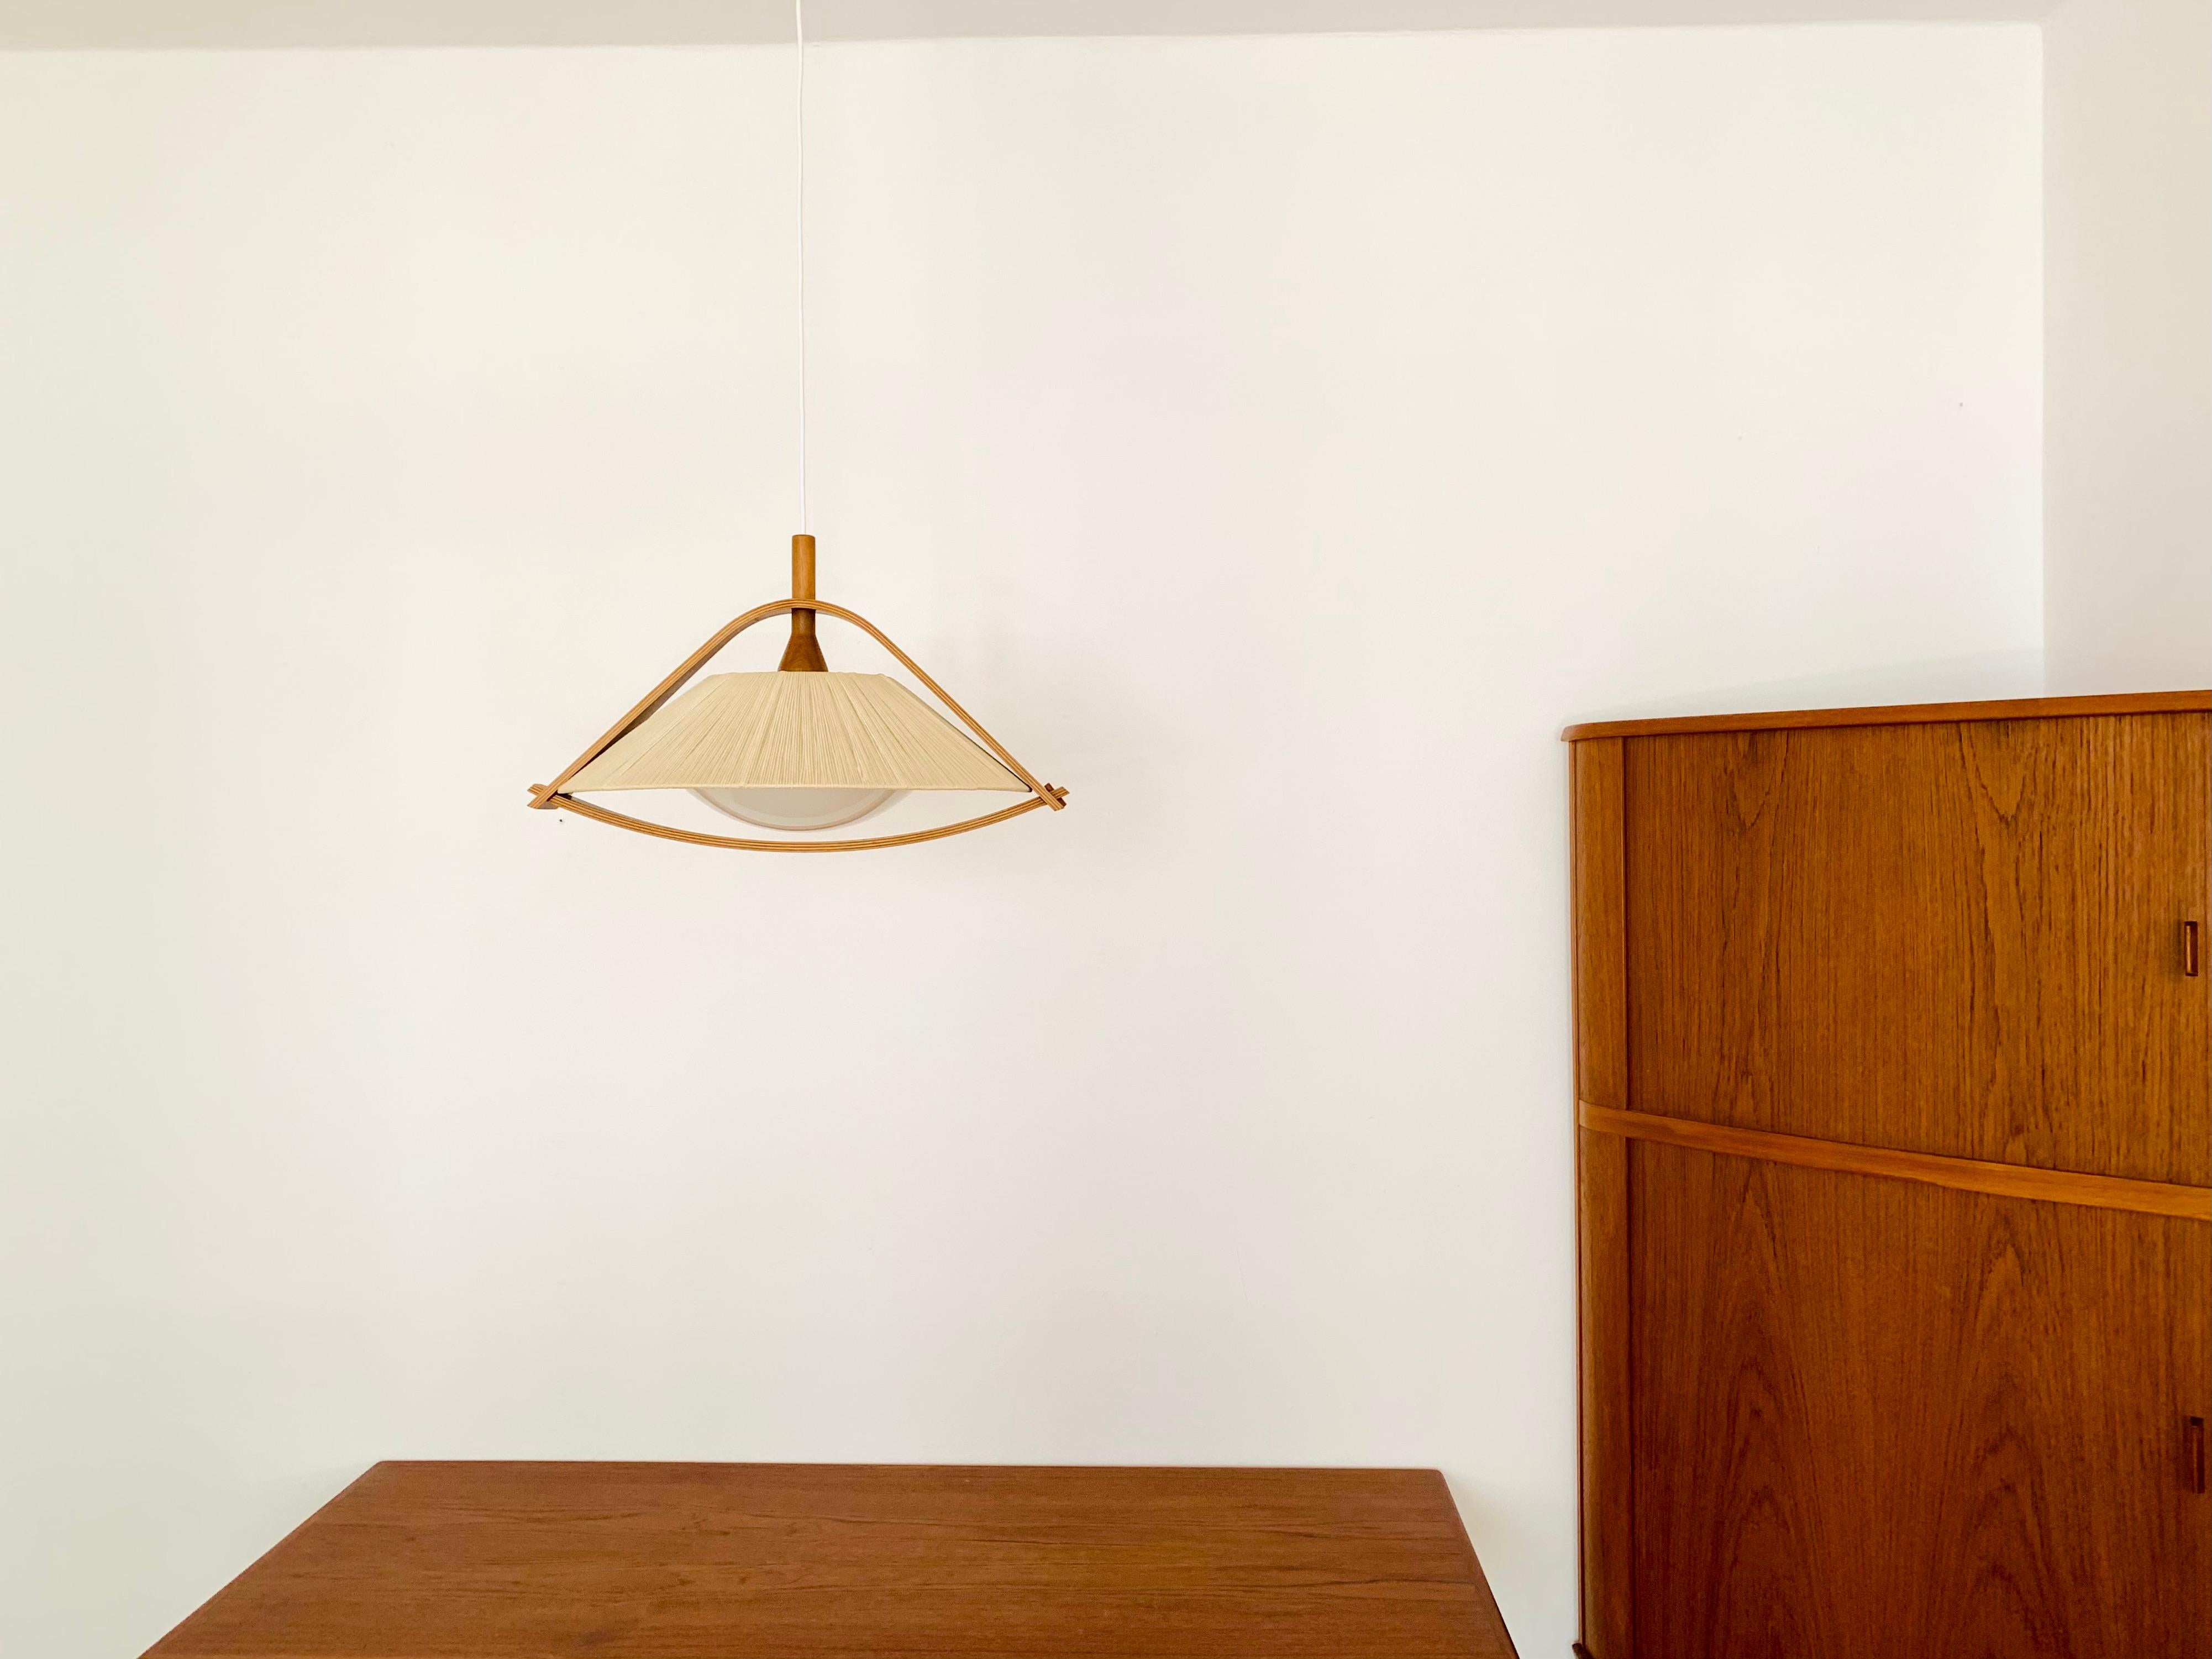 Raffia Bast and Walnut Pendant Lamp by Temde In Good Condition For Sale In München, DE